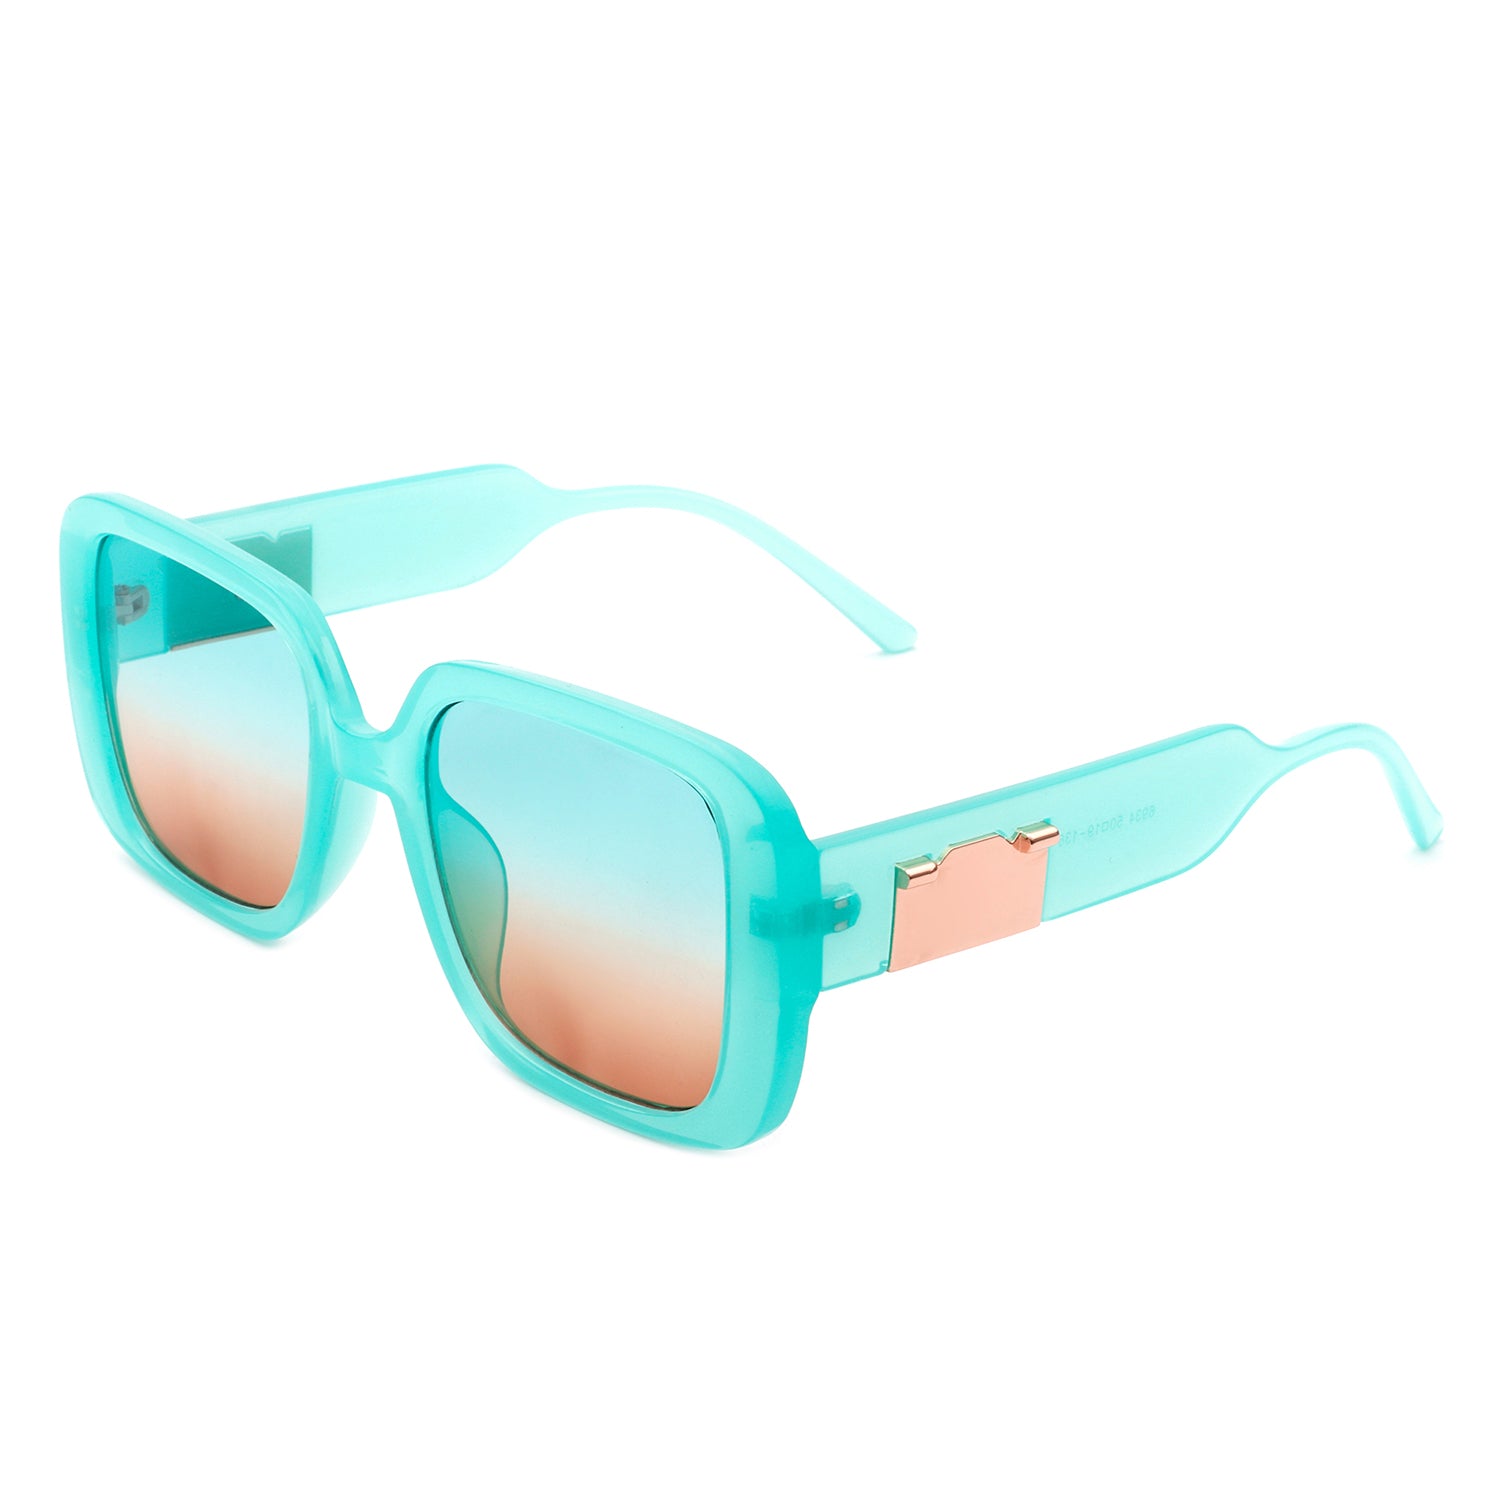 Womens high fashion style plastic sunglasses SI1-7985 - City Sunglass